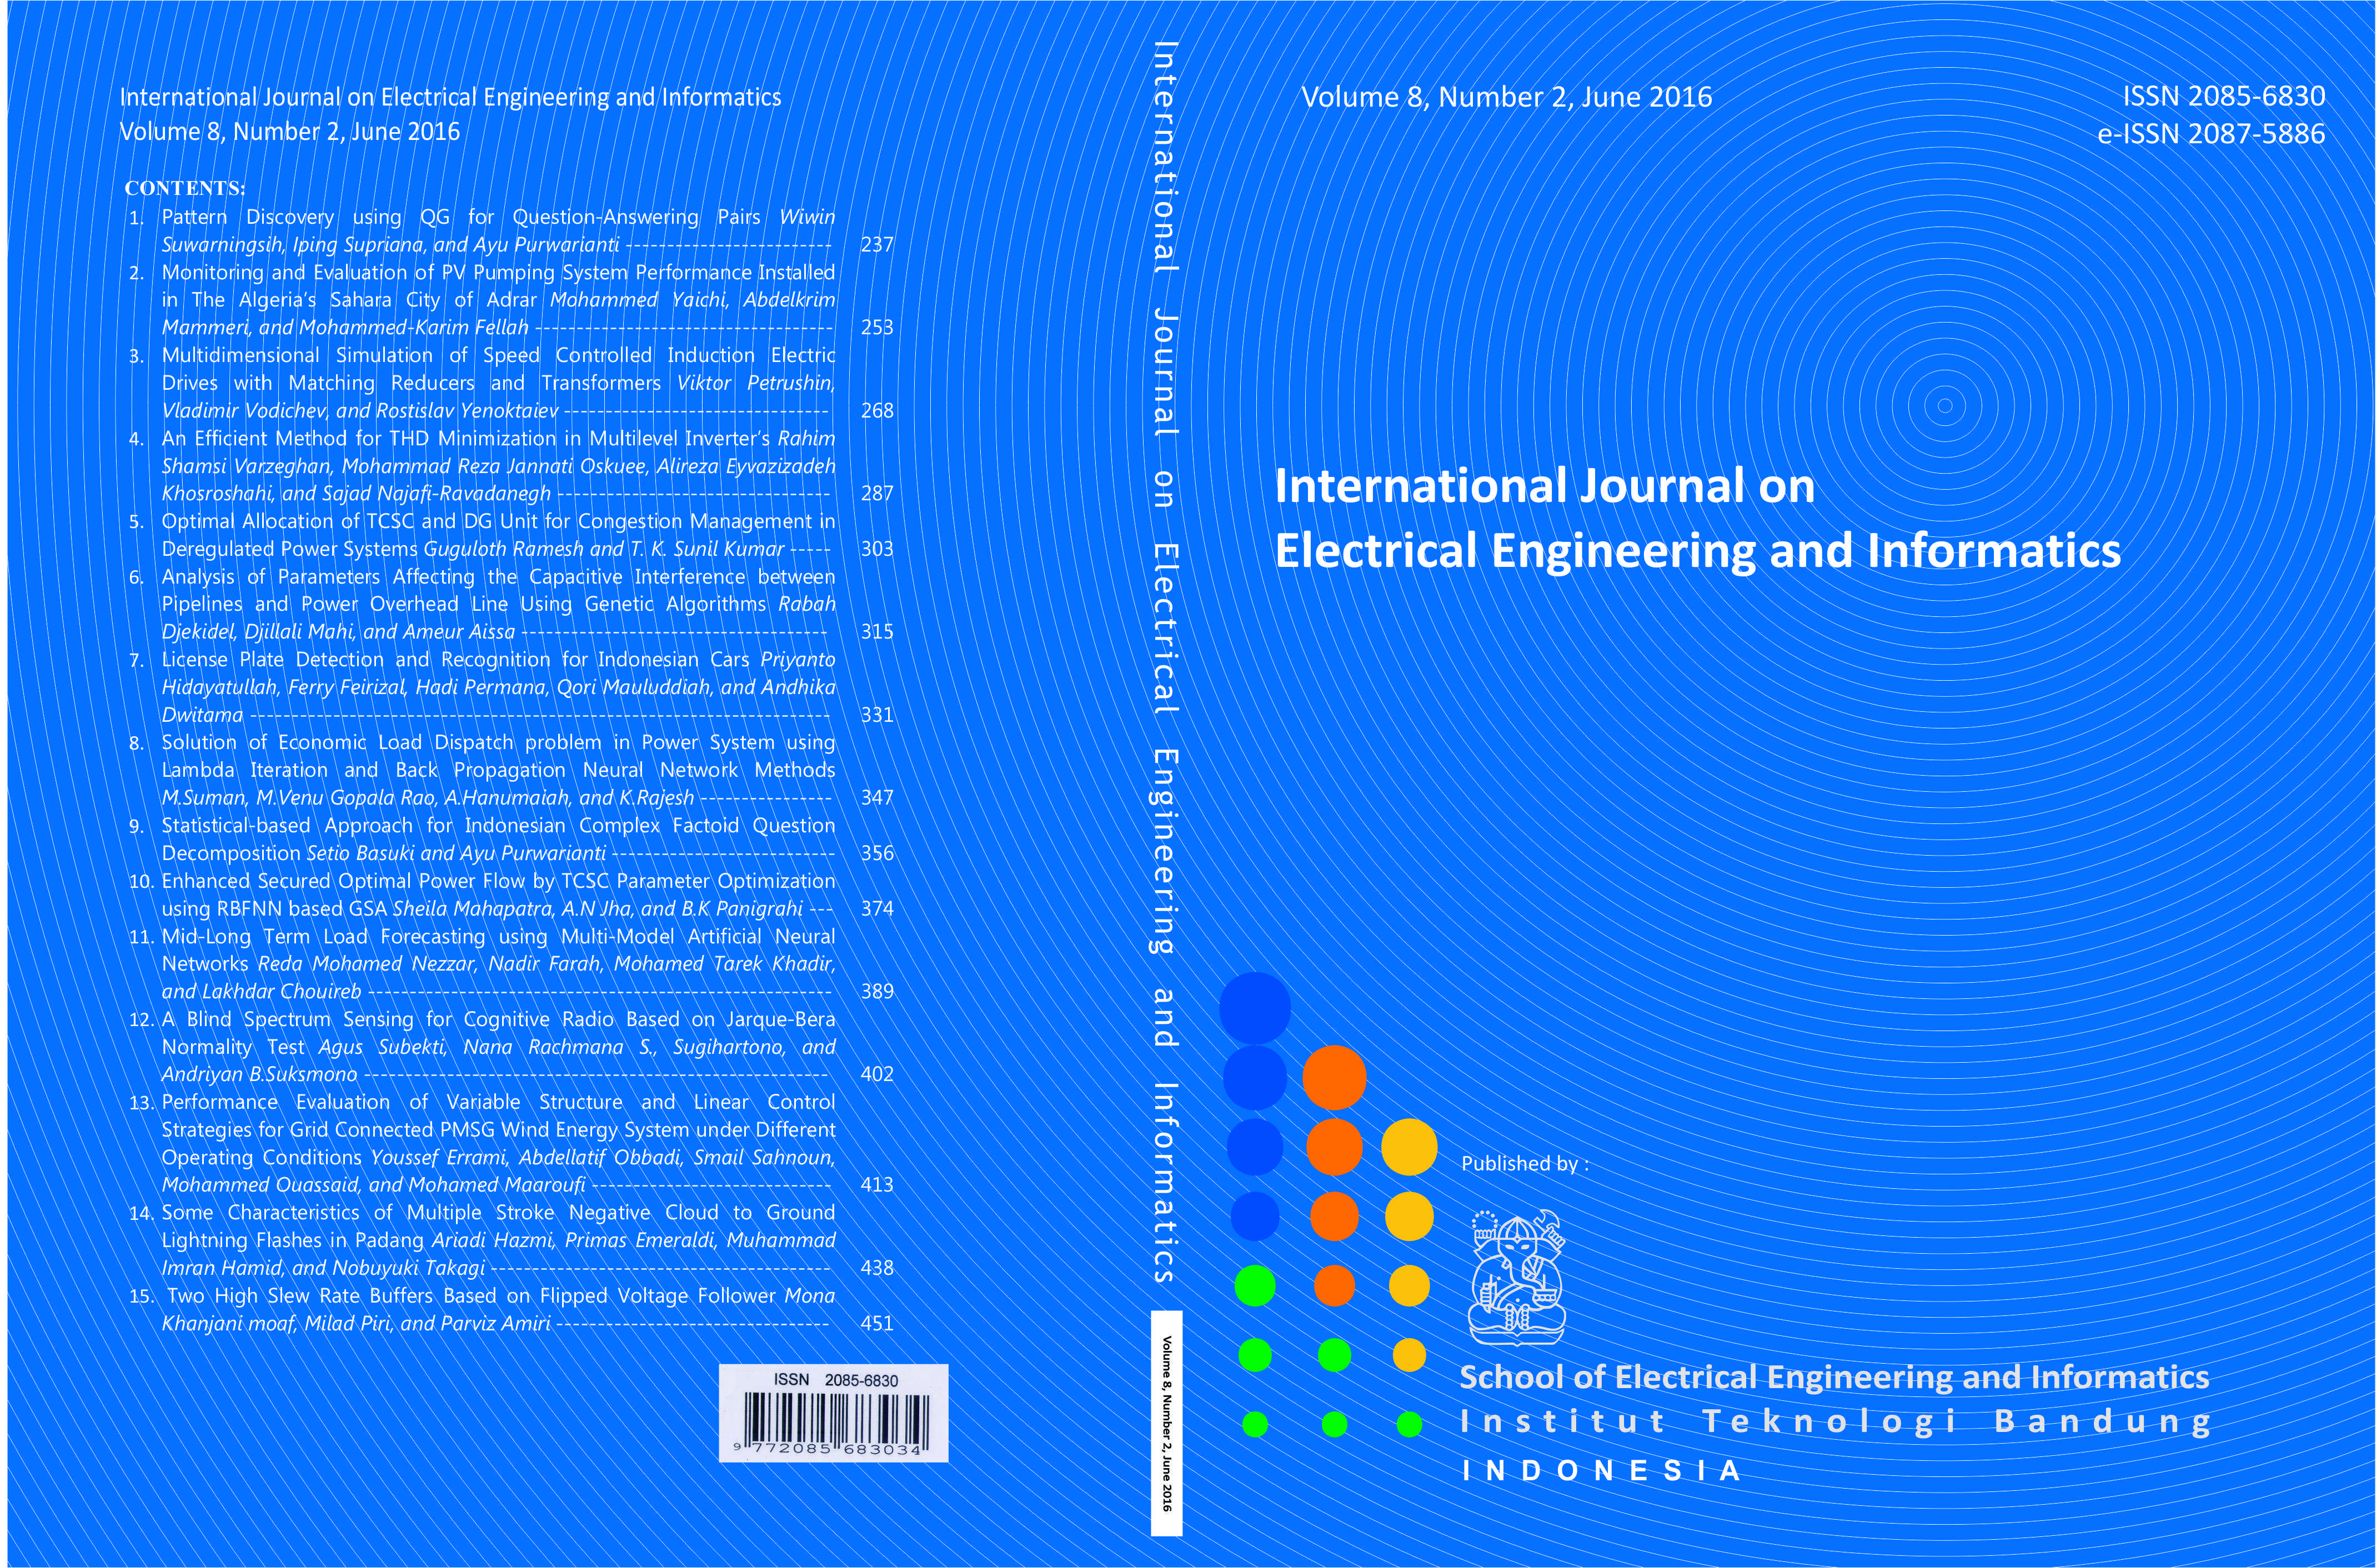 Journal cover Vol. 8 No. 2 June 2016